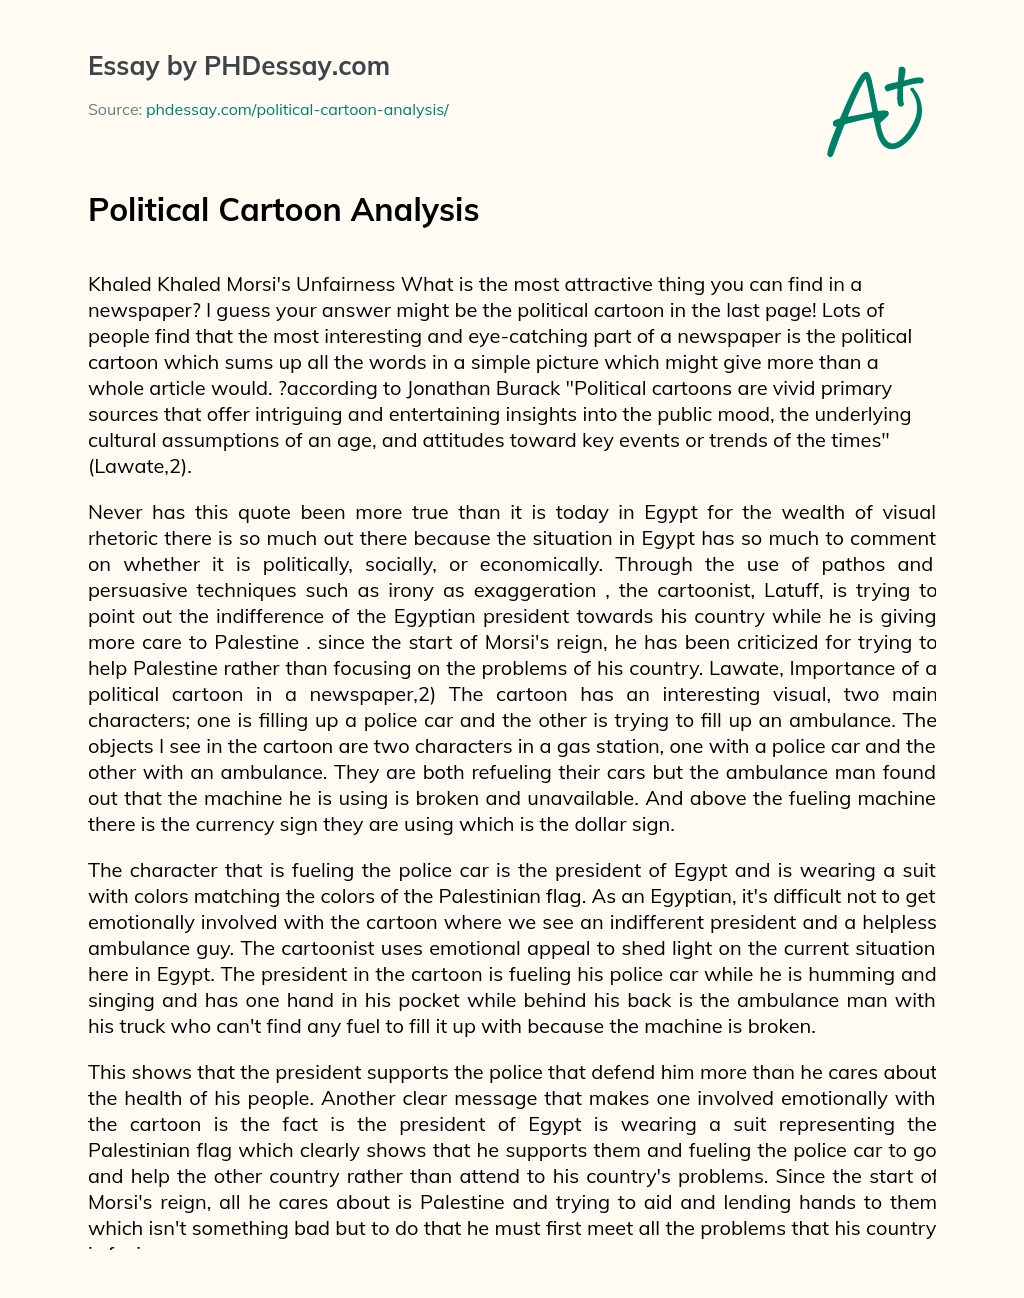 political cartoon analysis essay examples